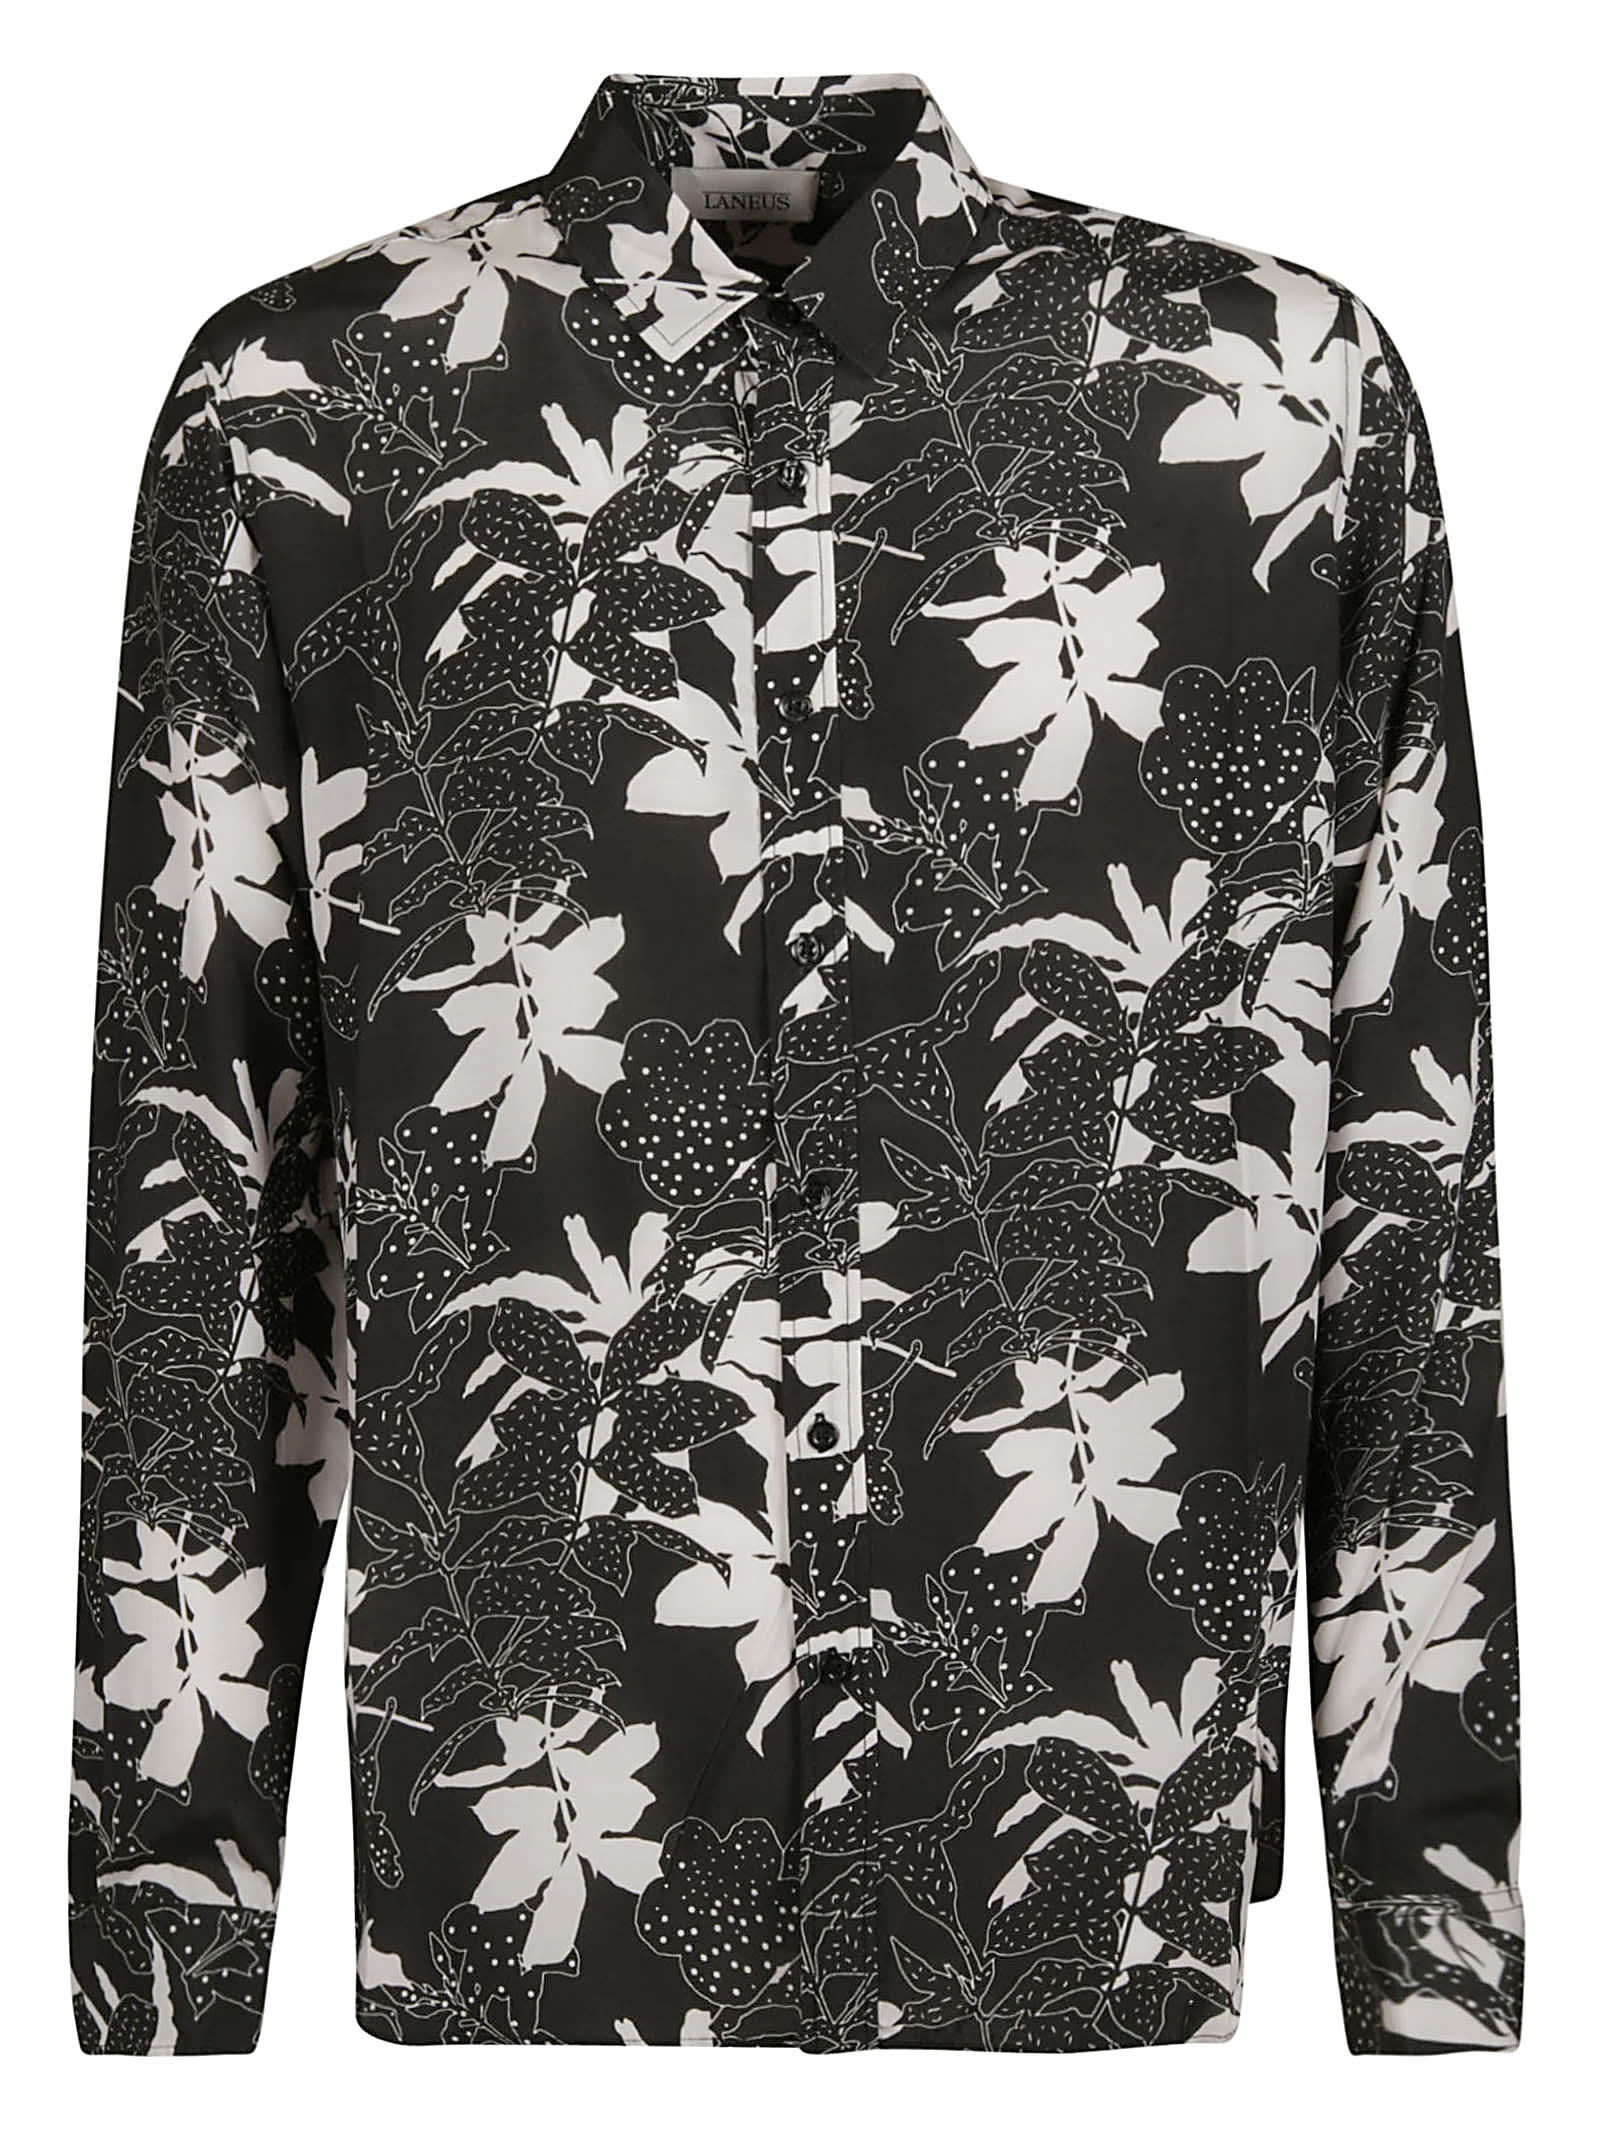 Laneus Tropical Shirt